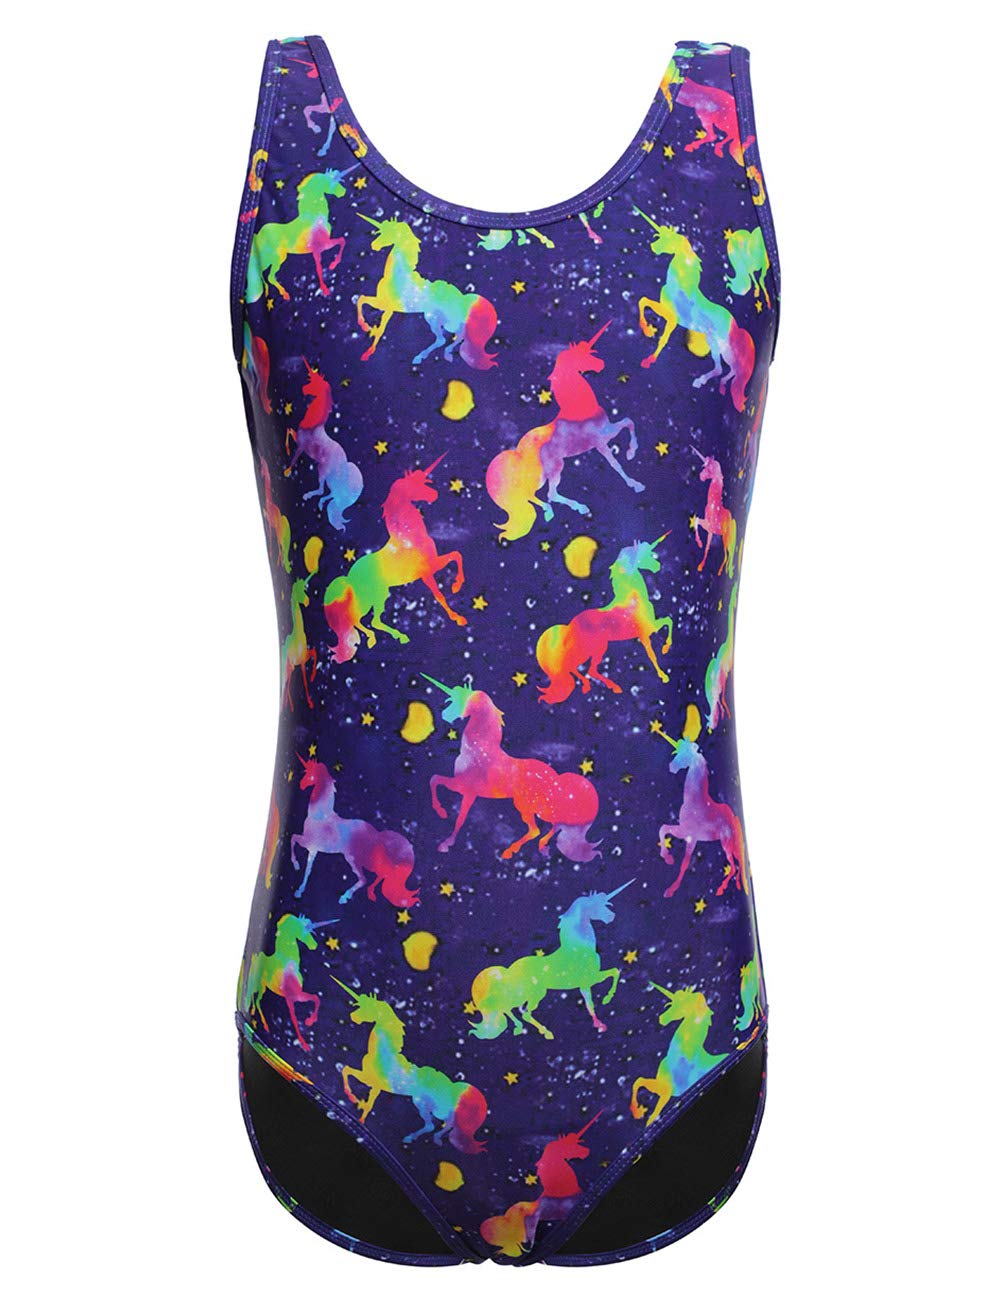 unicorn swim suit for girls - navy